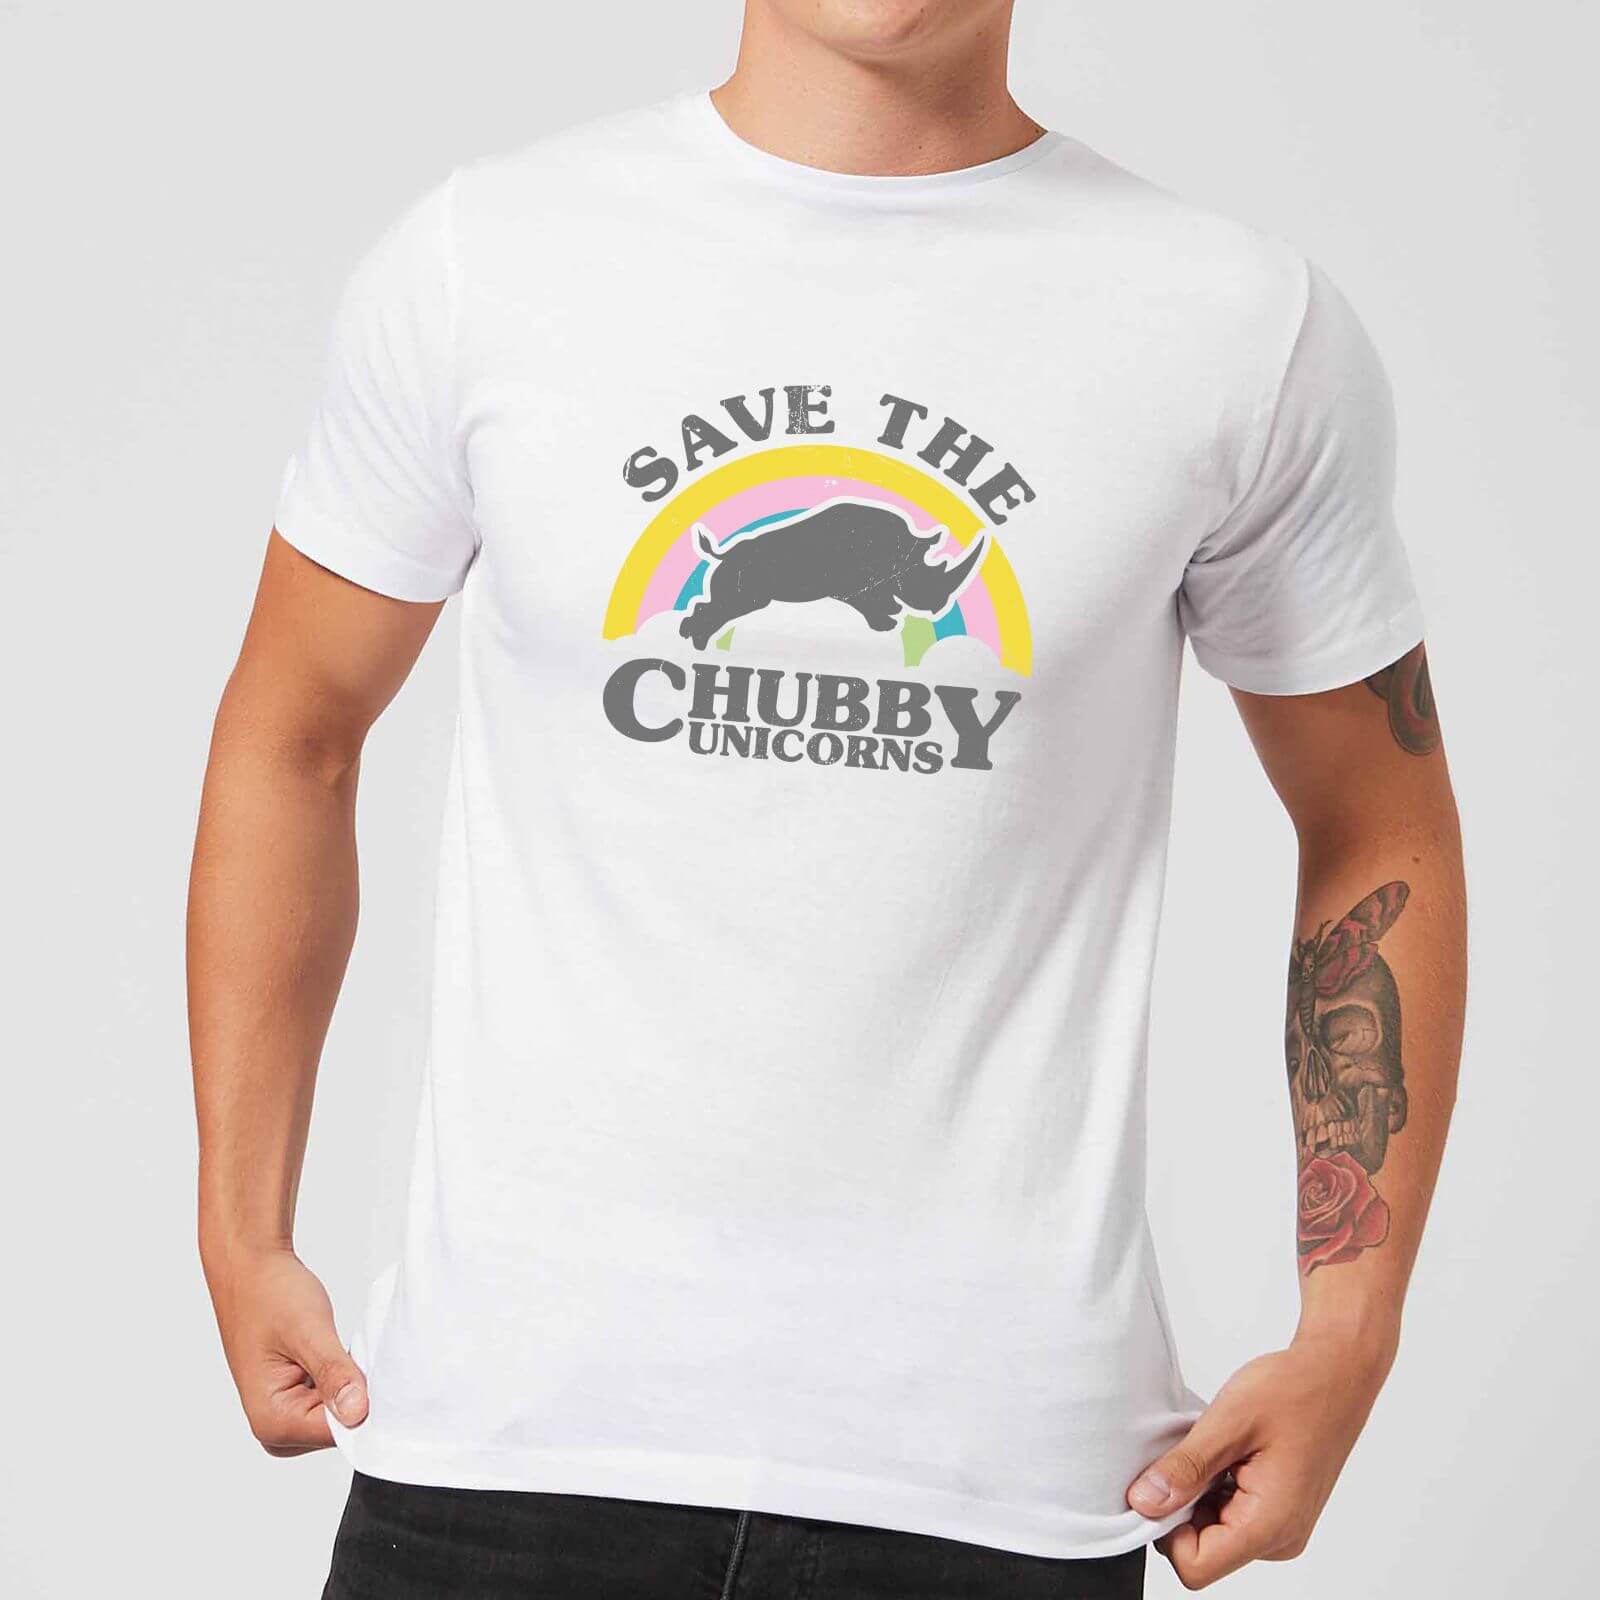 Save The Chubby Unicorns T-Shirt - White - L